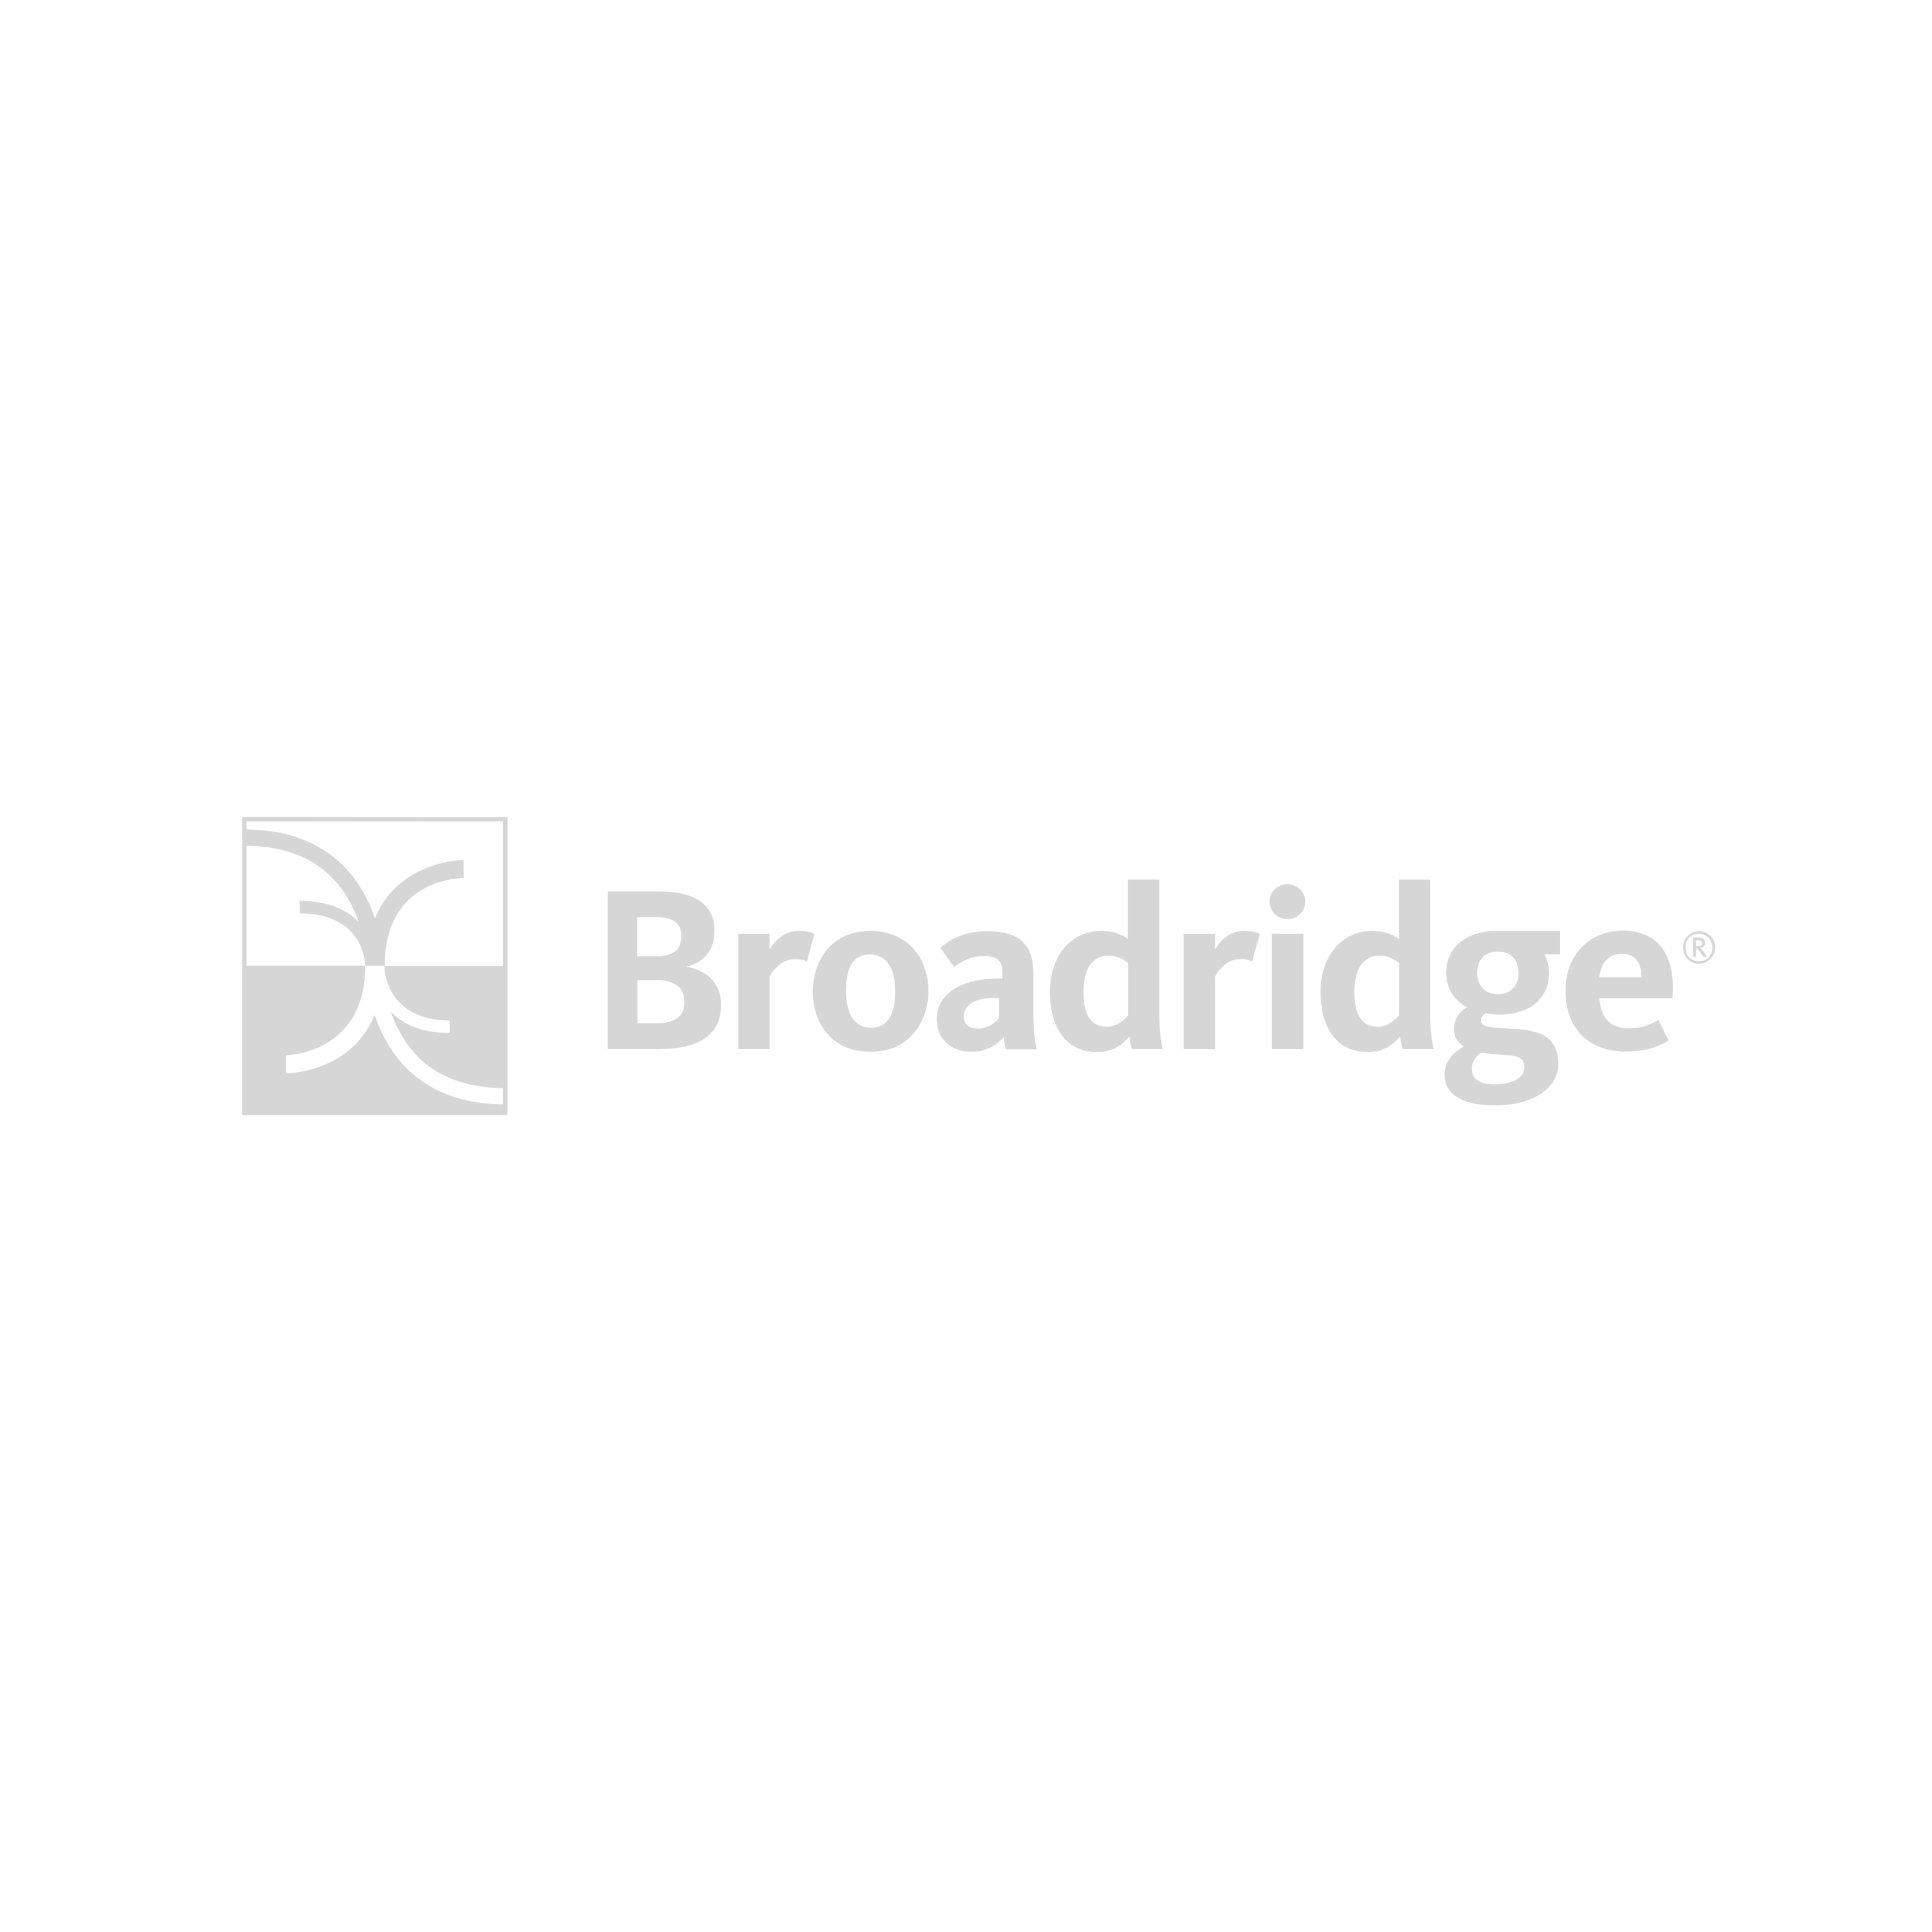 2560px-Broadridge_Financial_Solutions_Logo-GREY